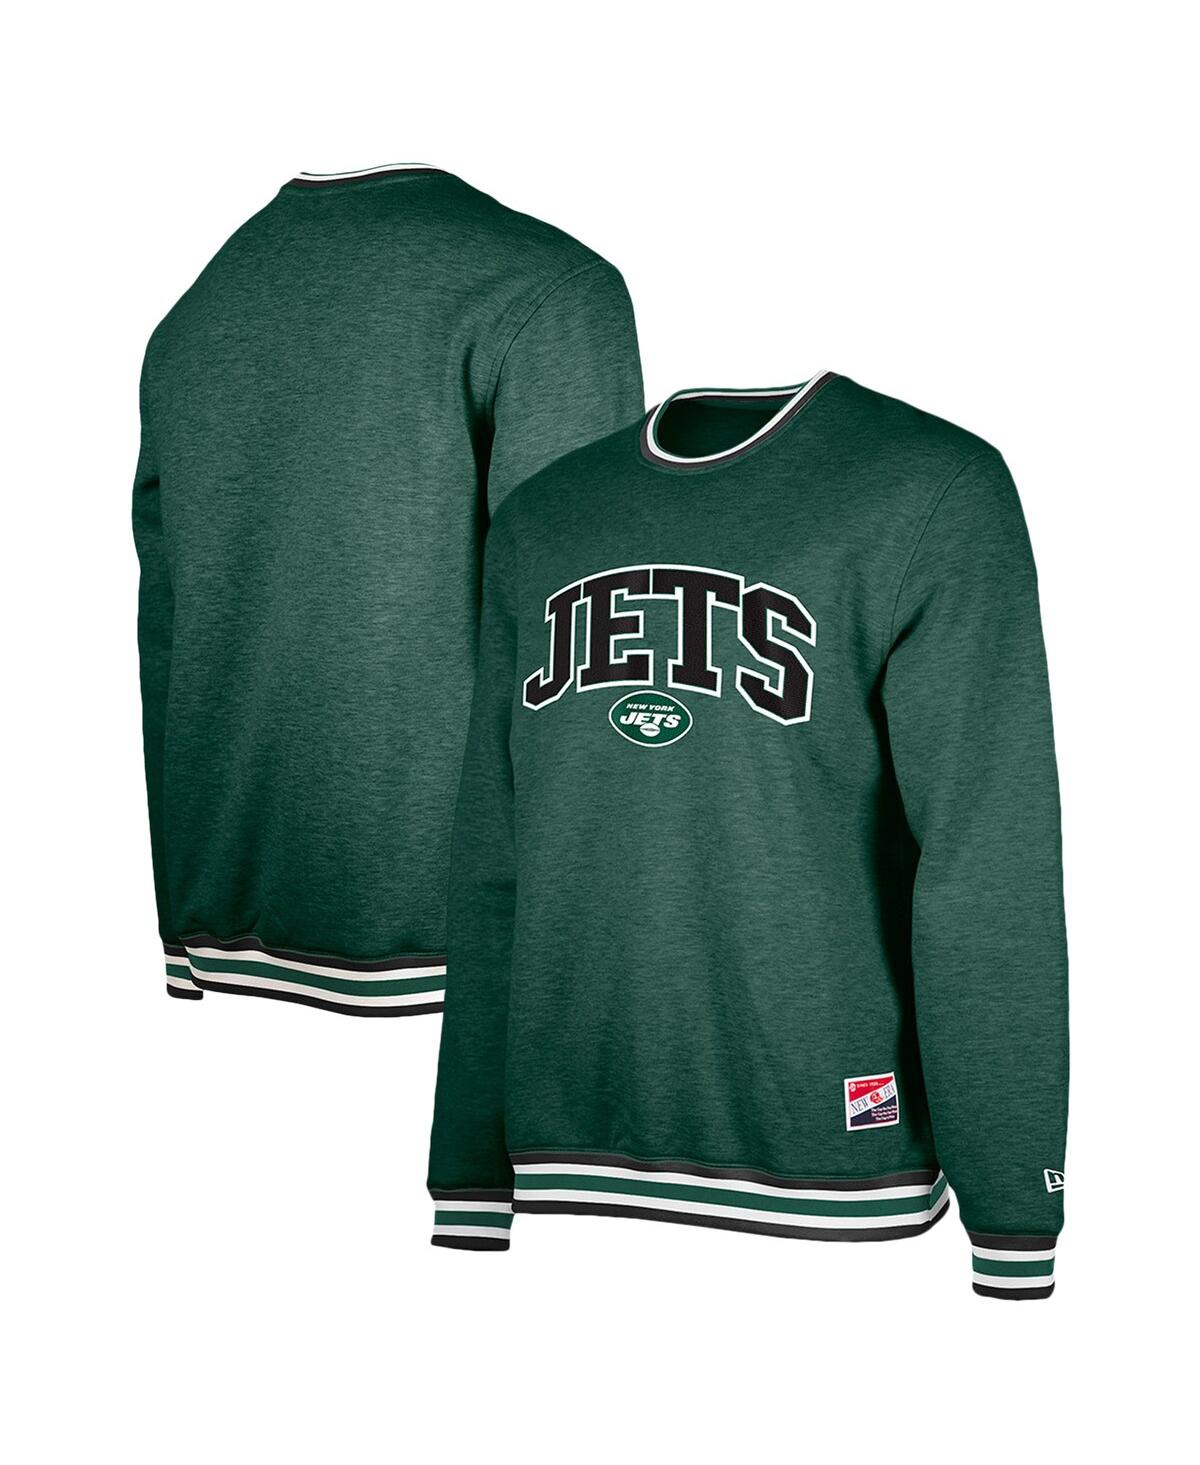 Men's Green New York Jets Pullover Sweatshirt - Green